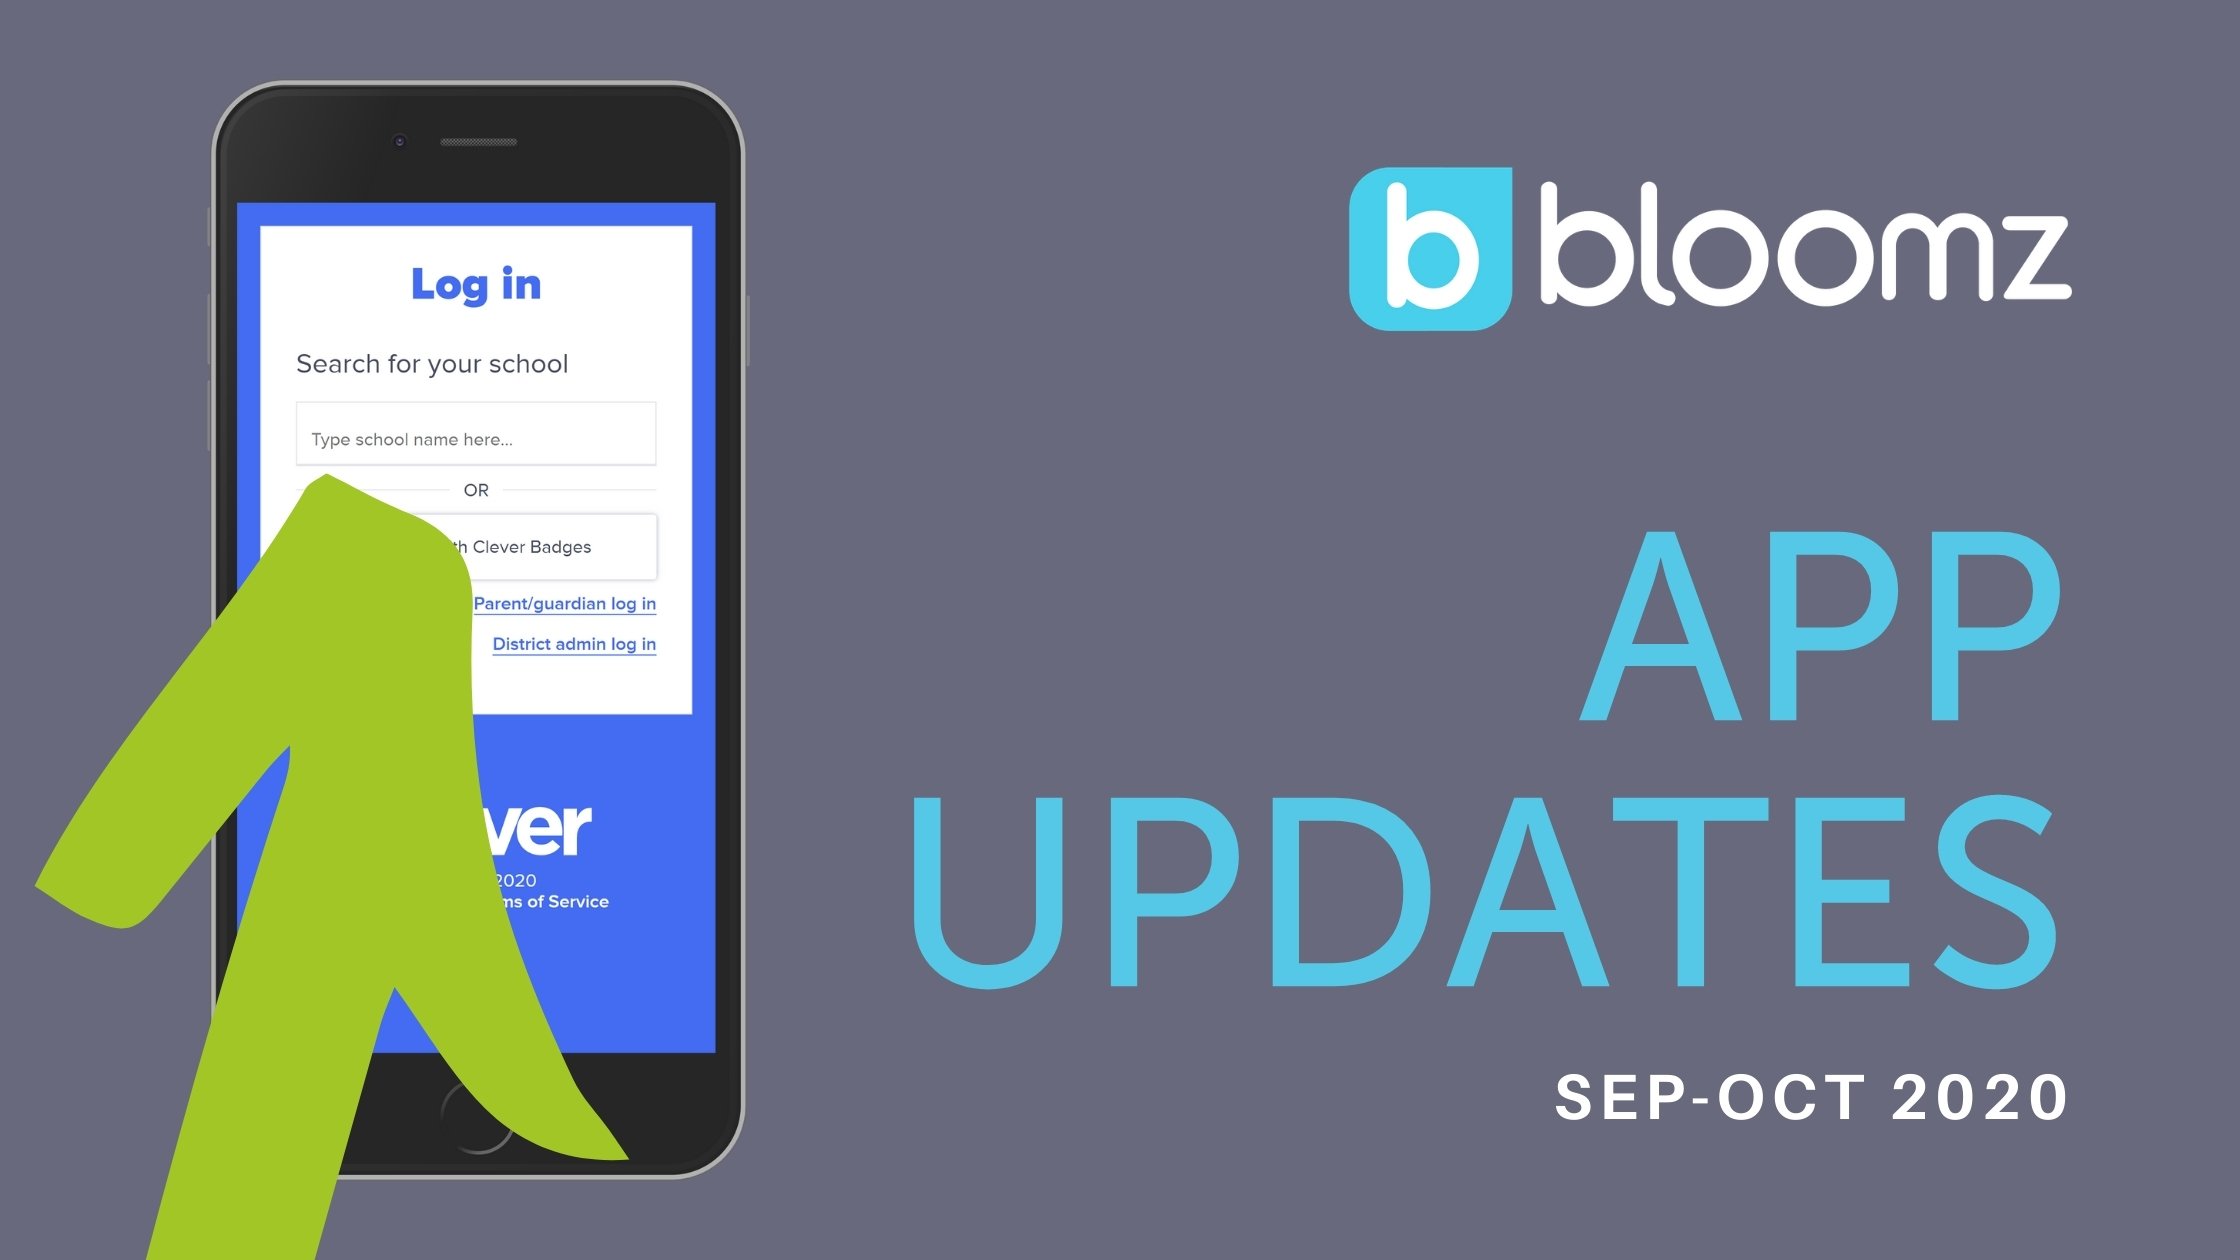 Bloomz Updates from September-October 2020